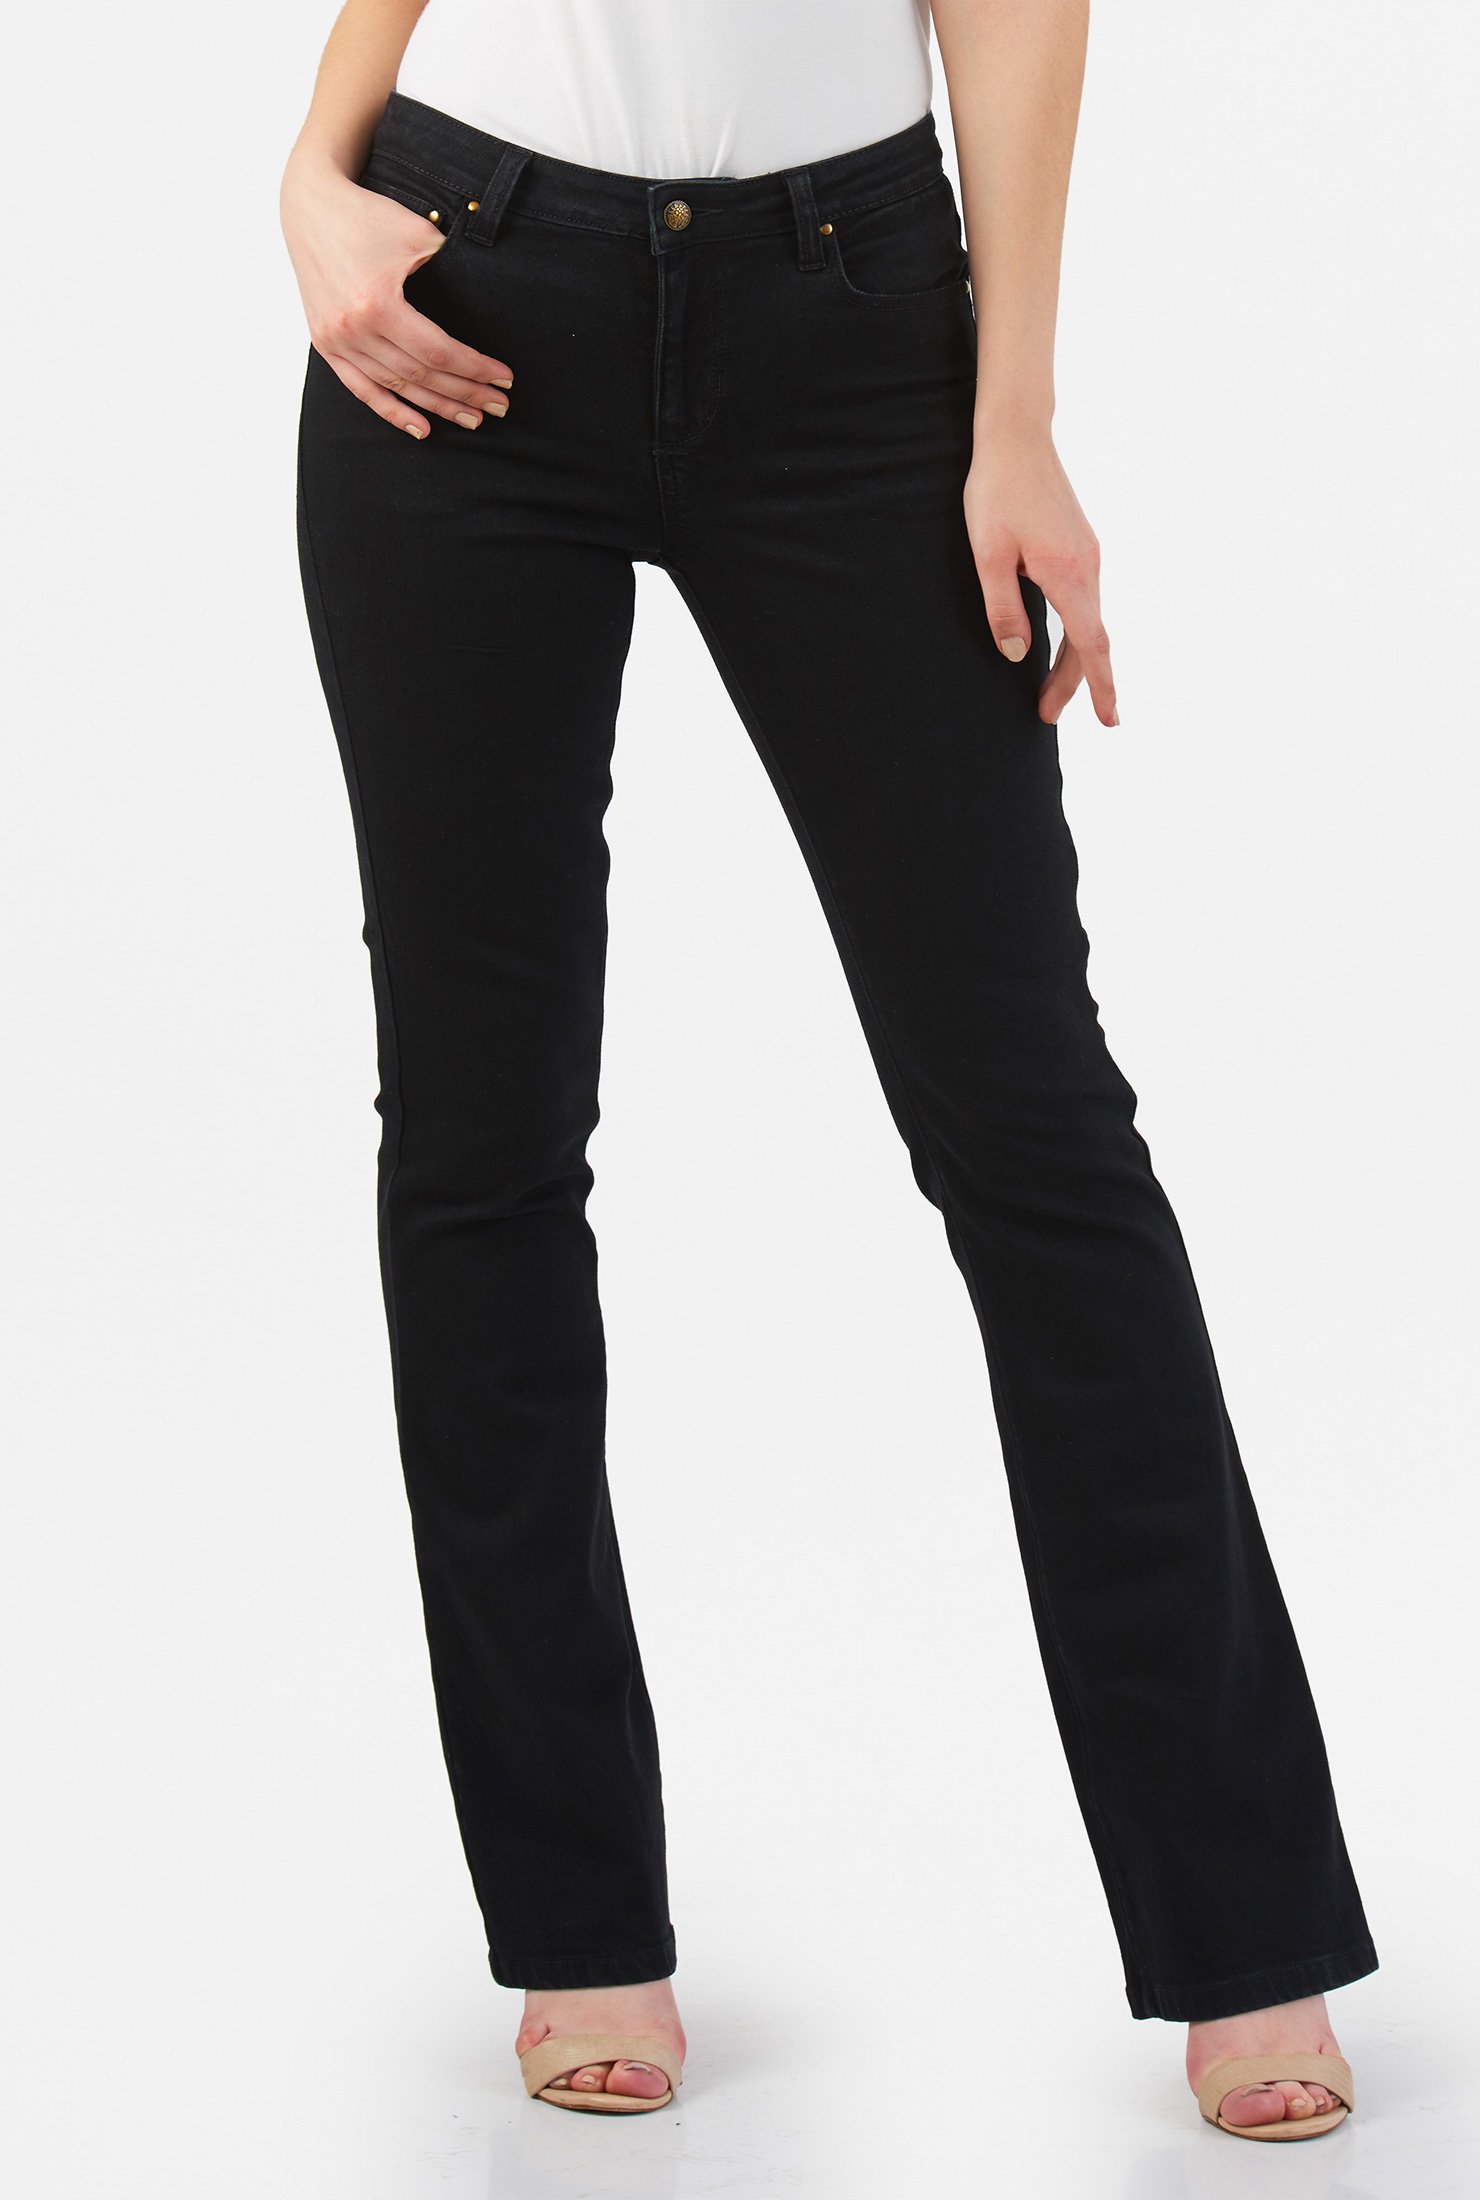 Shop Boot-cut black denim jeans | eShakti